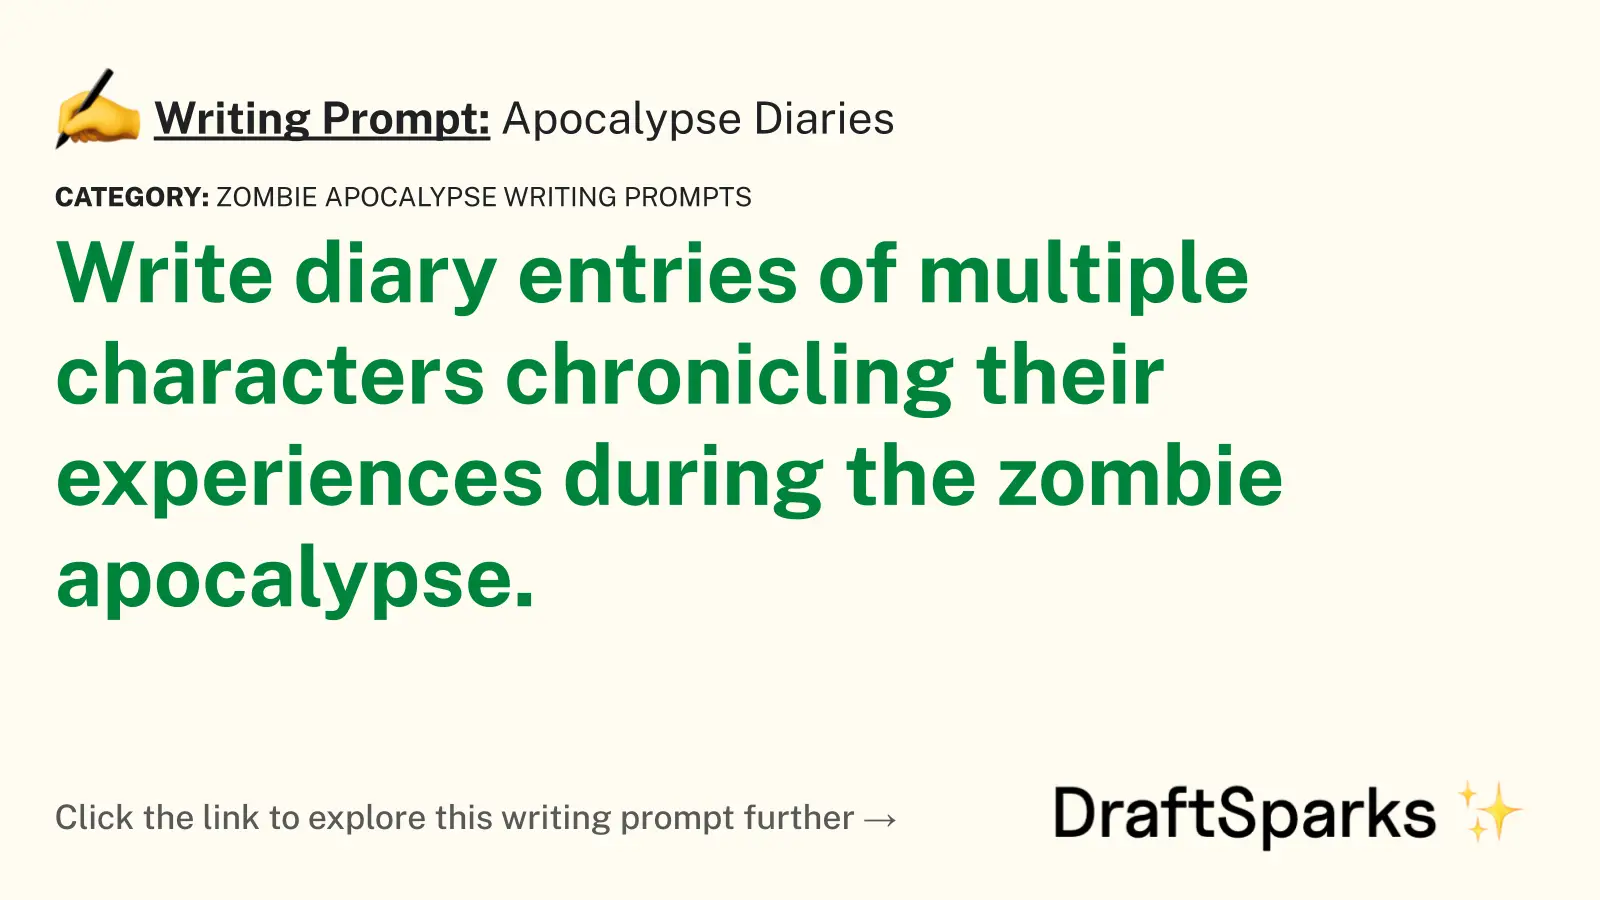 Apocalypse Diaries